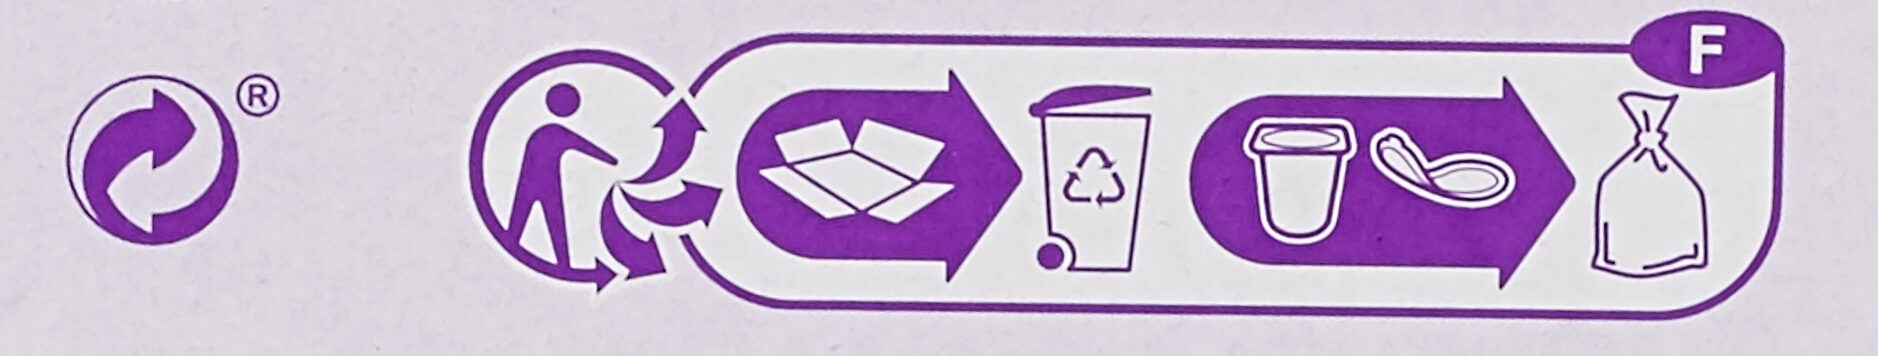 Fromage Blanc nature - Instruction de recyclage et/ou informations d'emballage